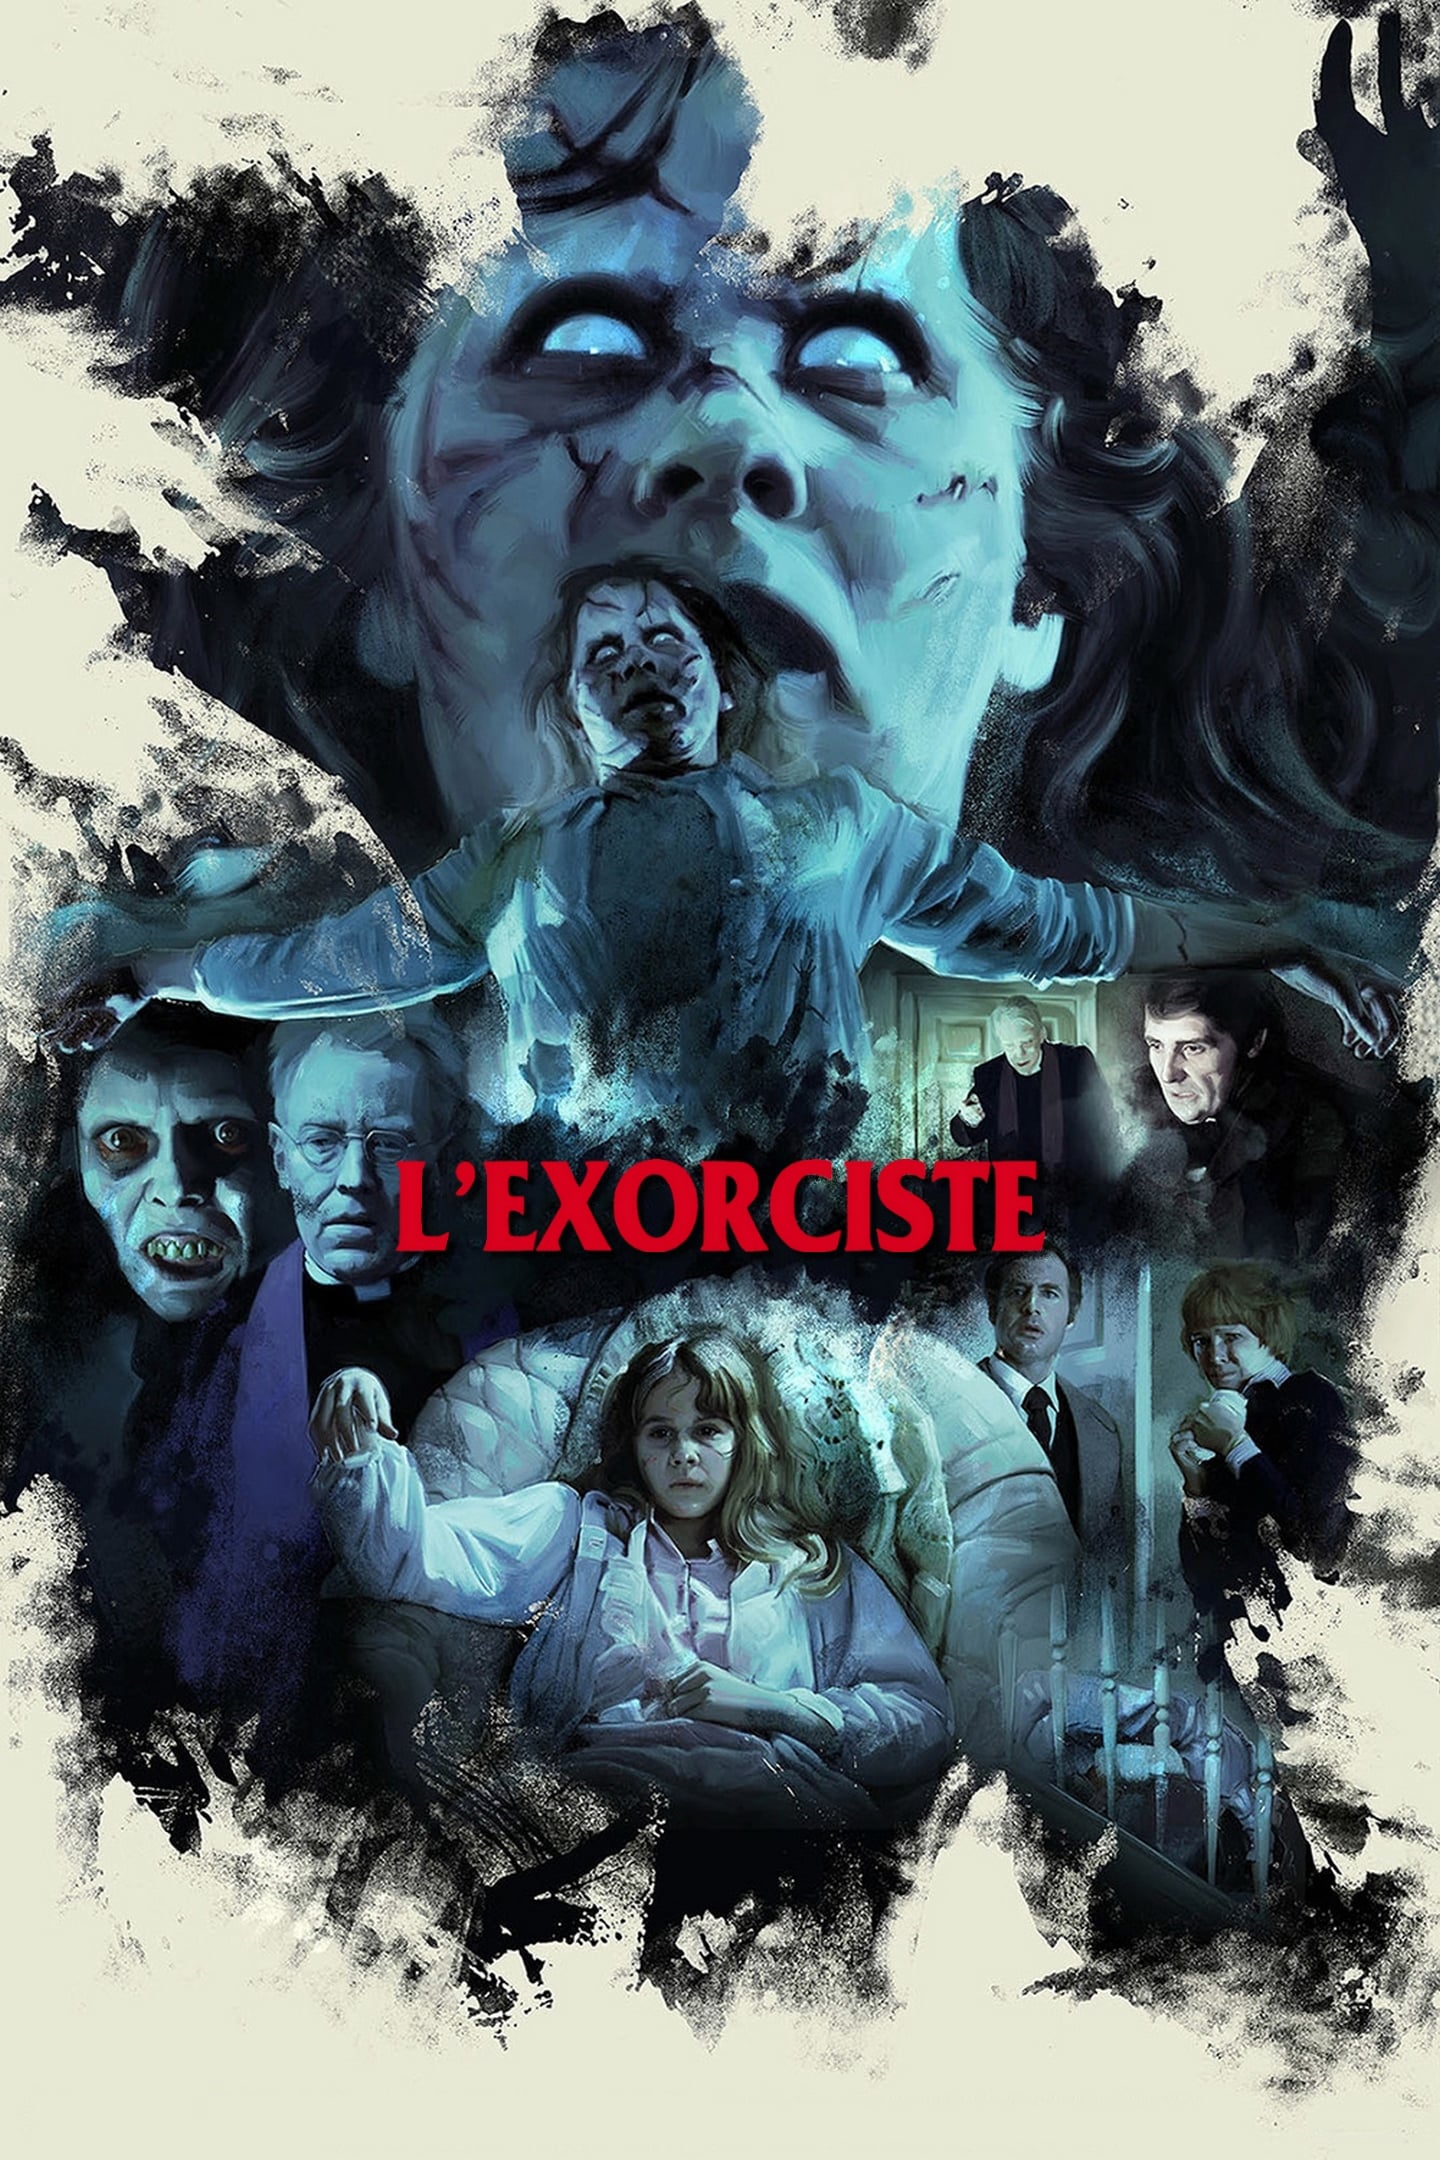 1973 The Exorcist